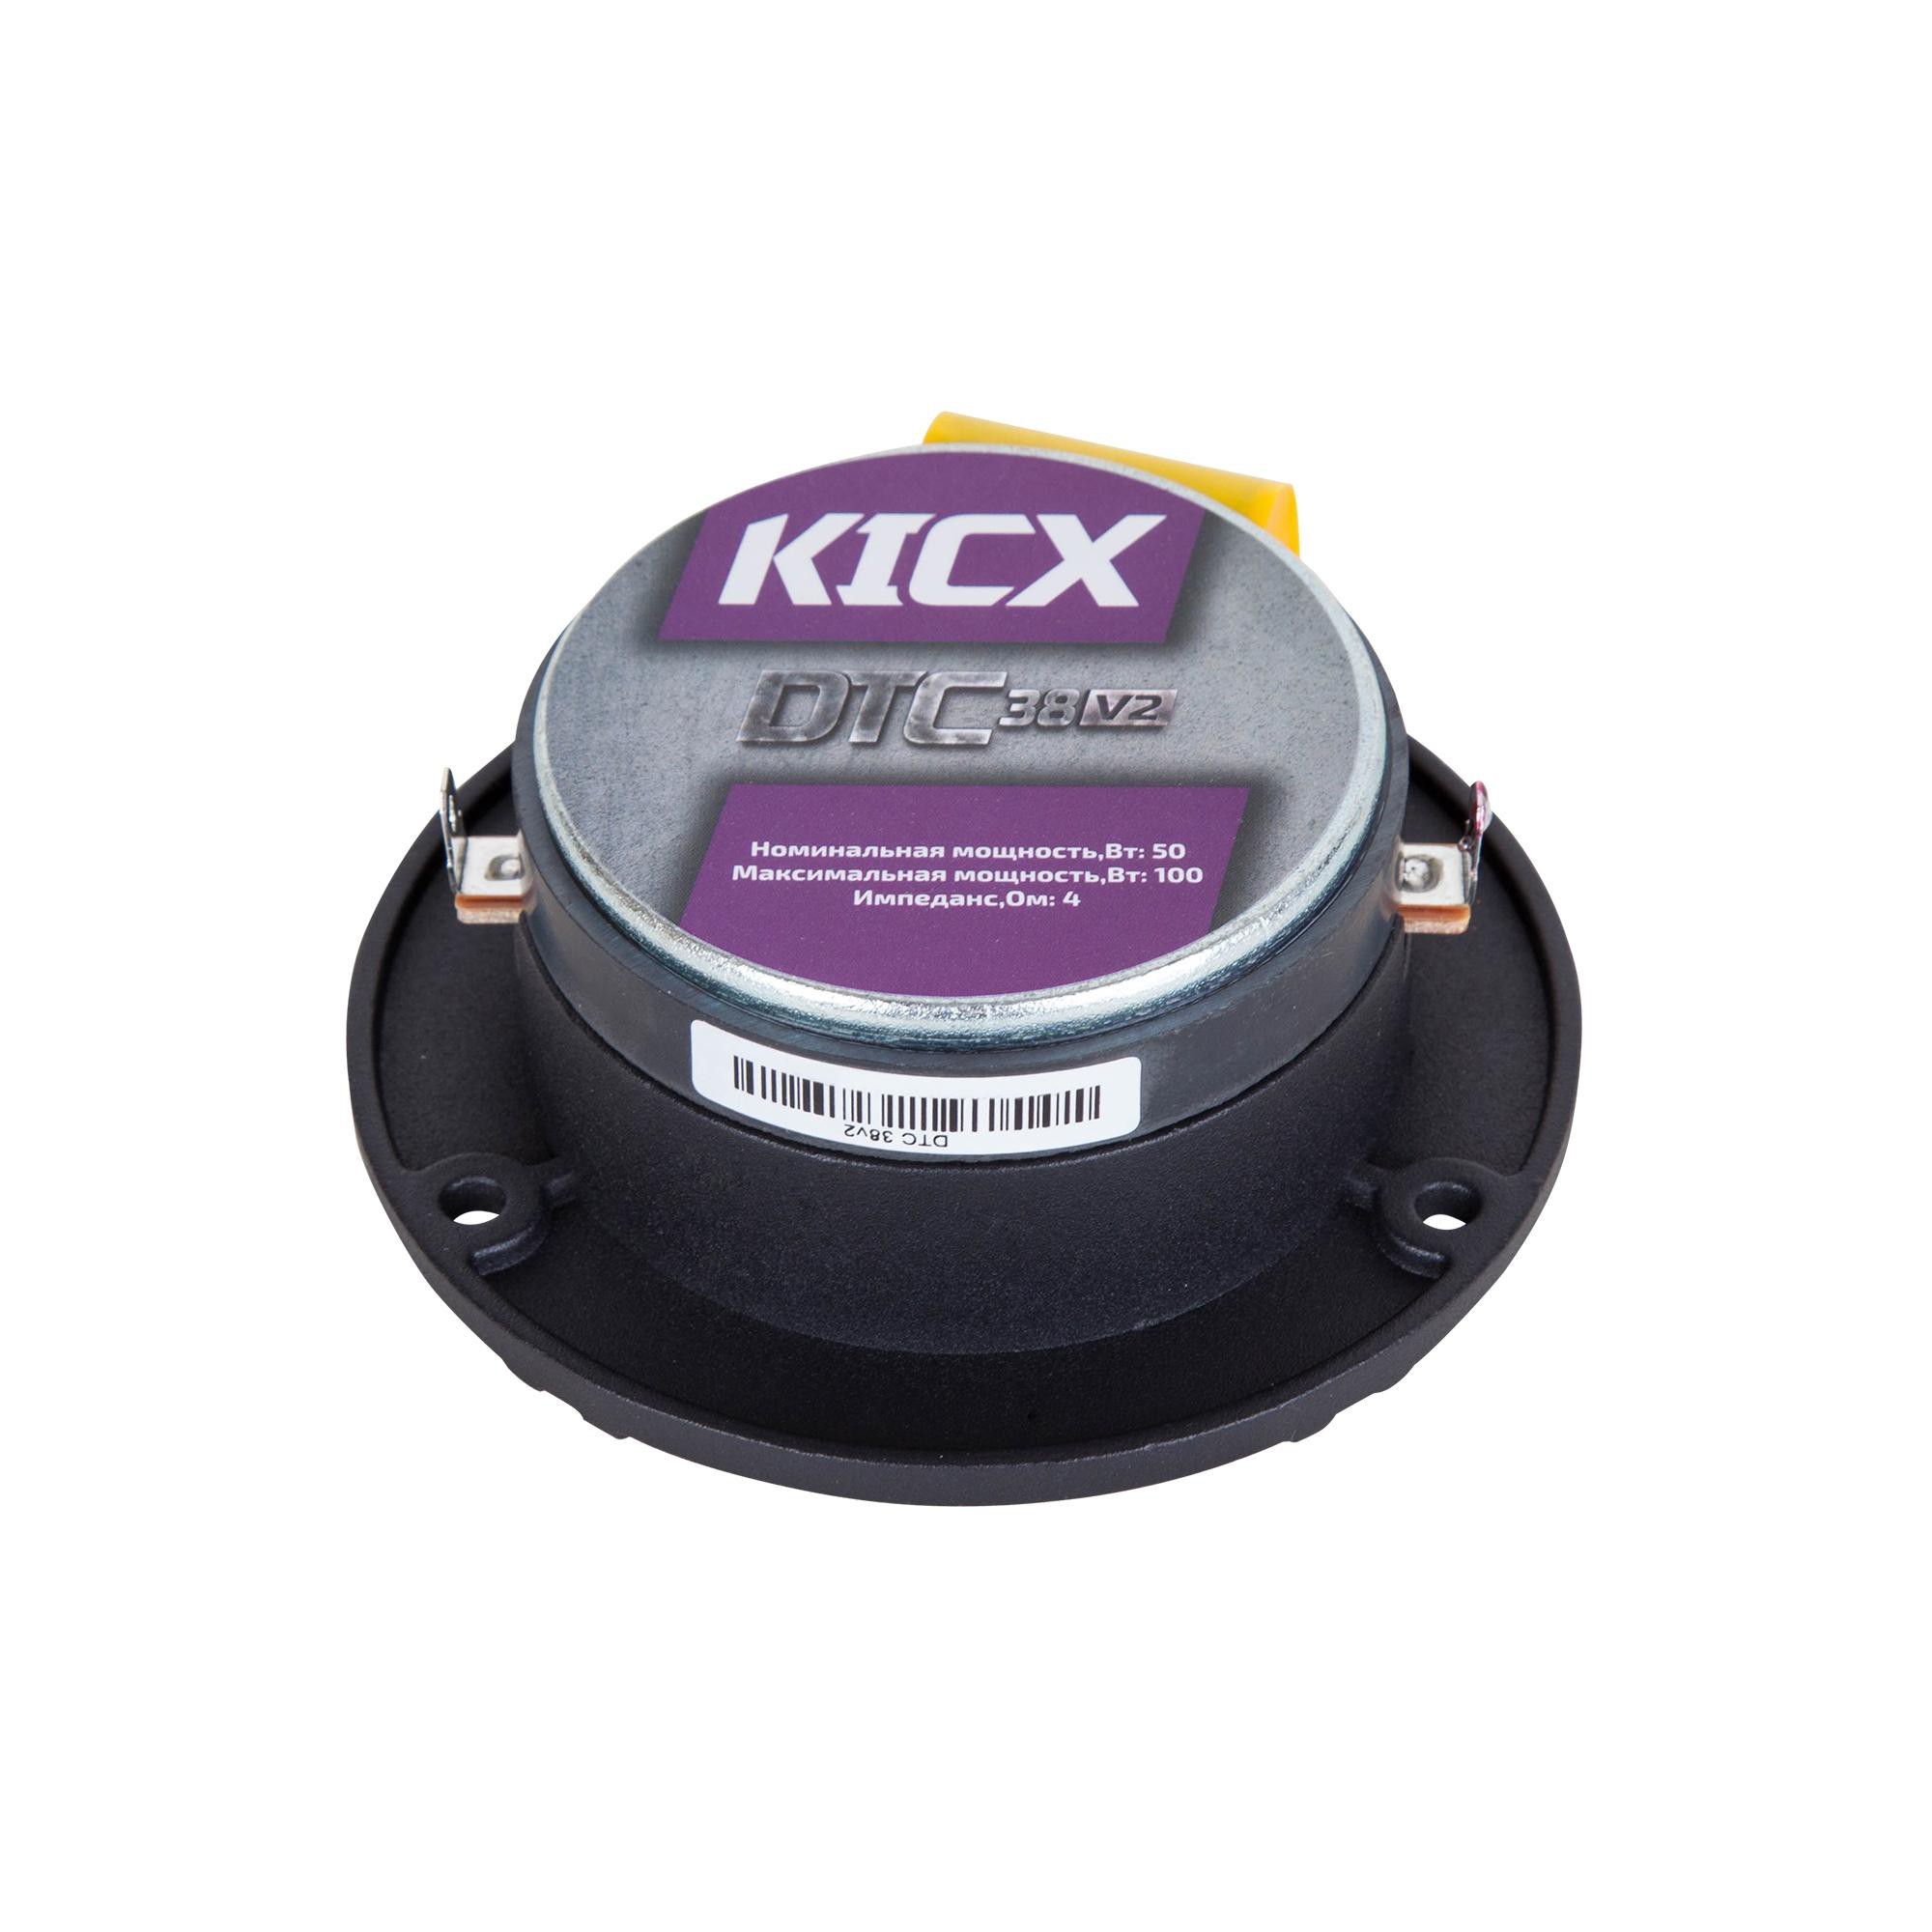 Kicx DTC-38 ver.2